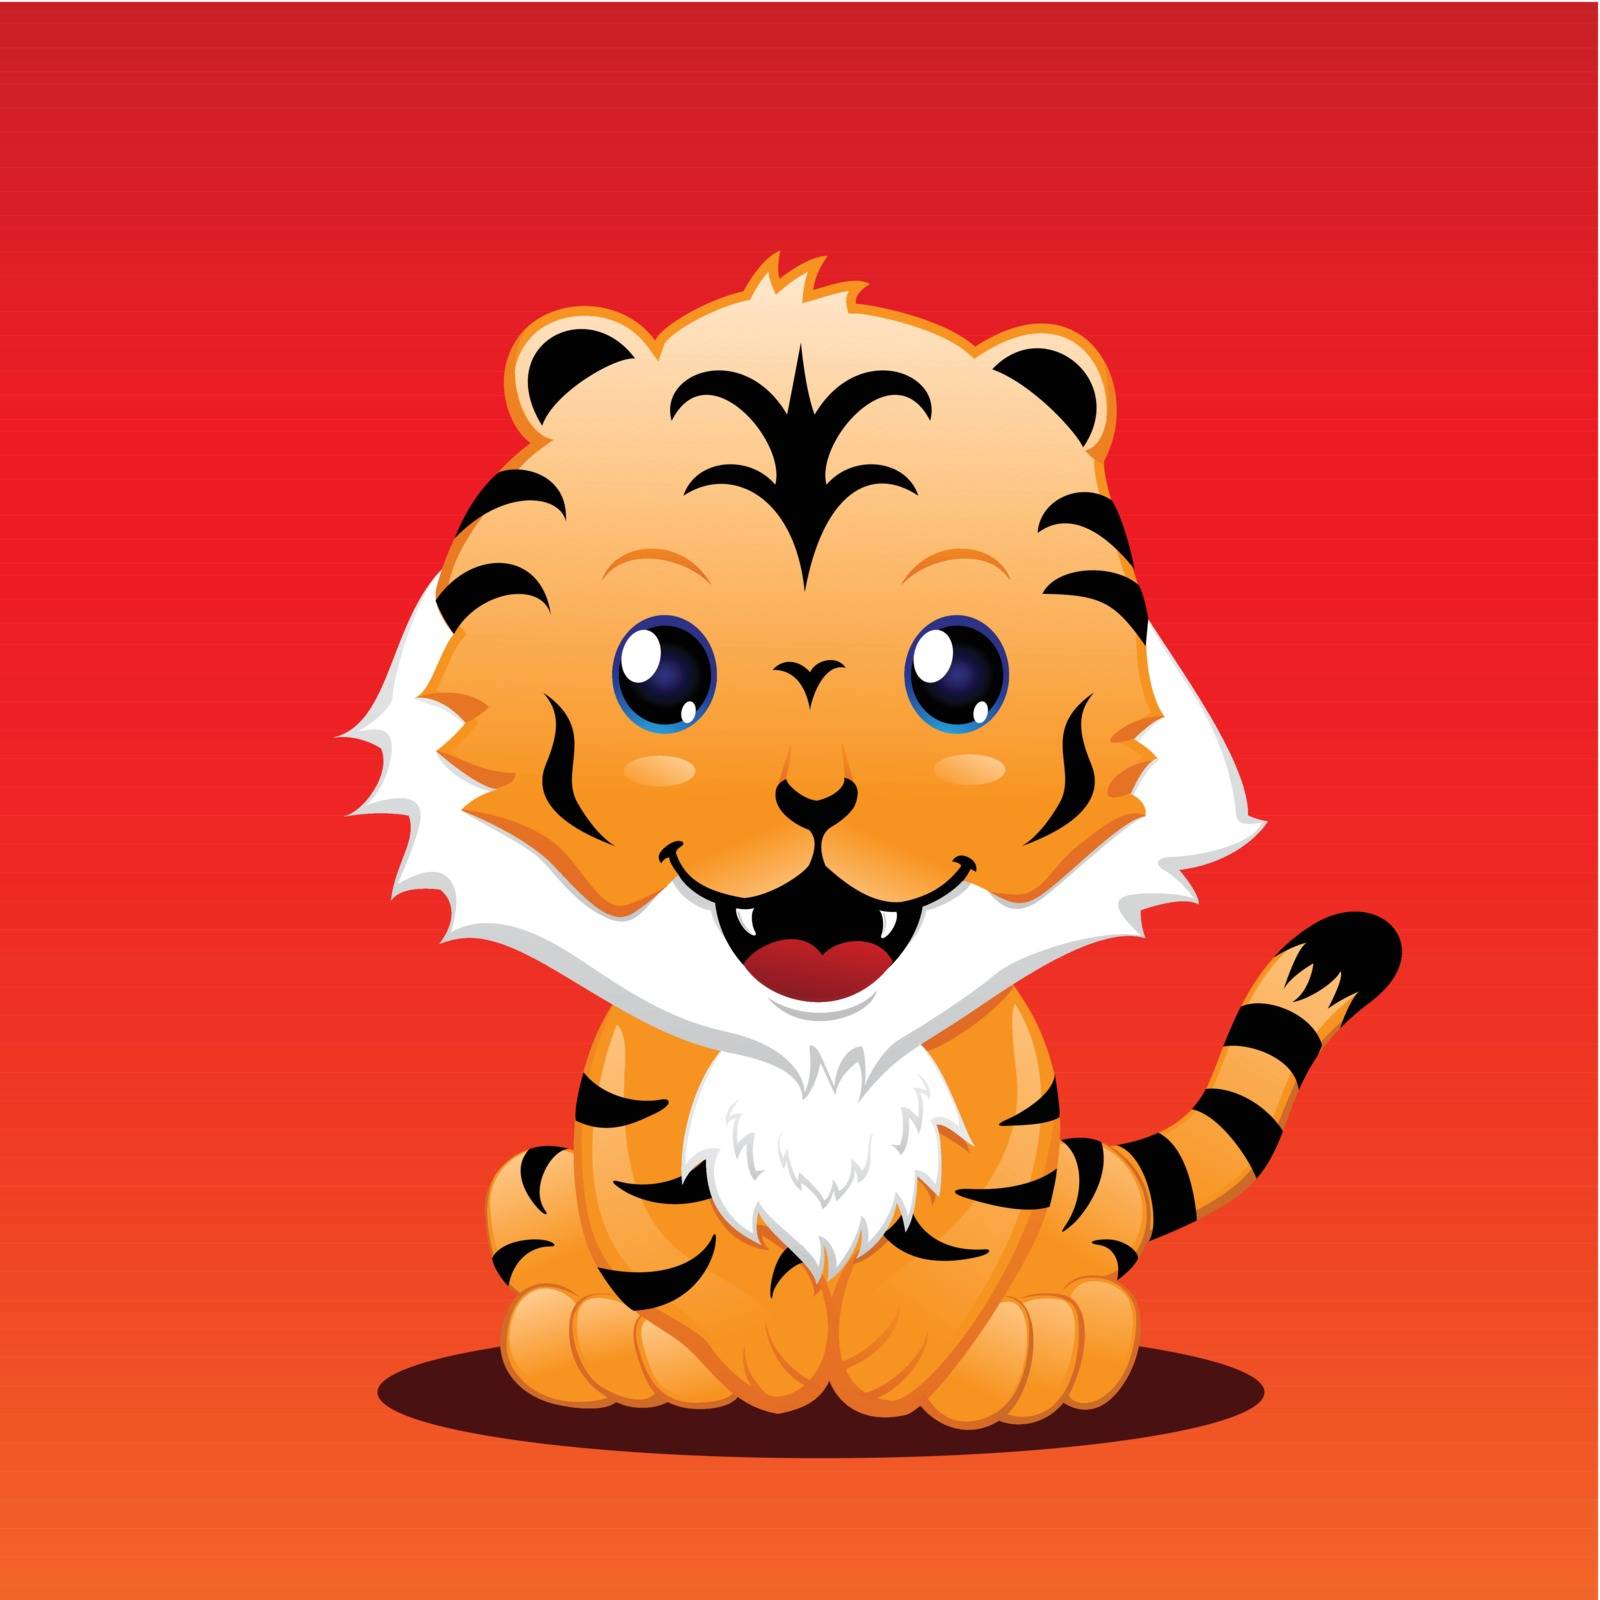 Cute tiger cartoon character